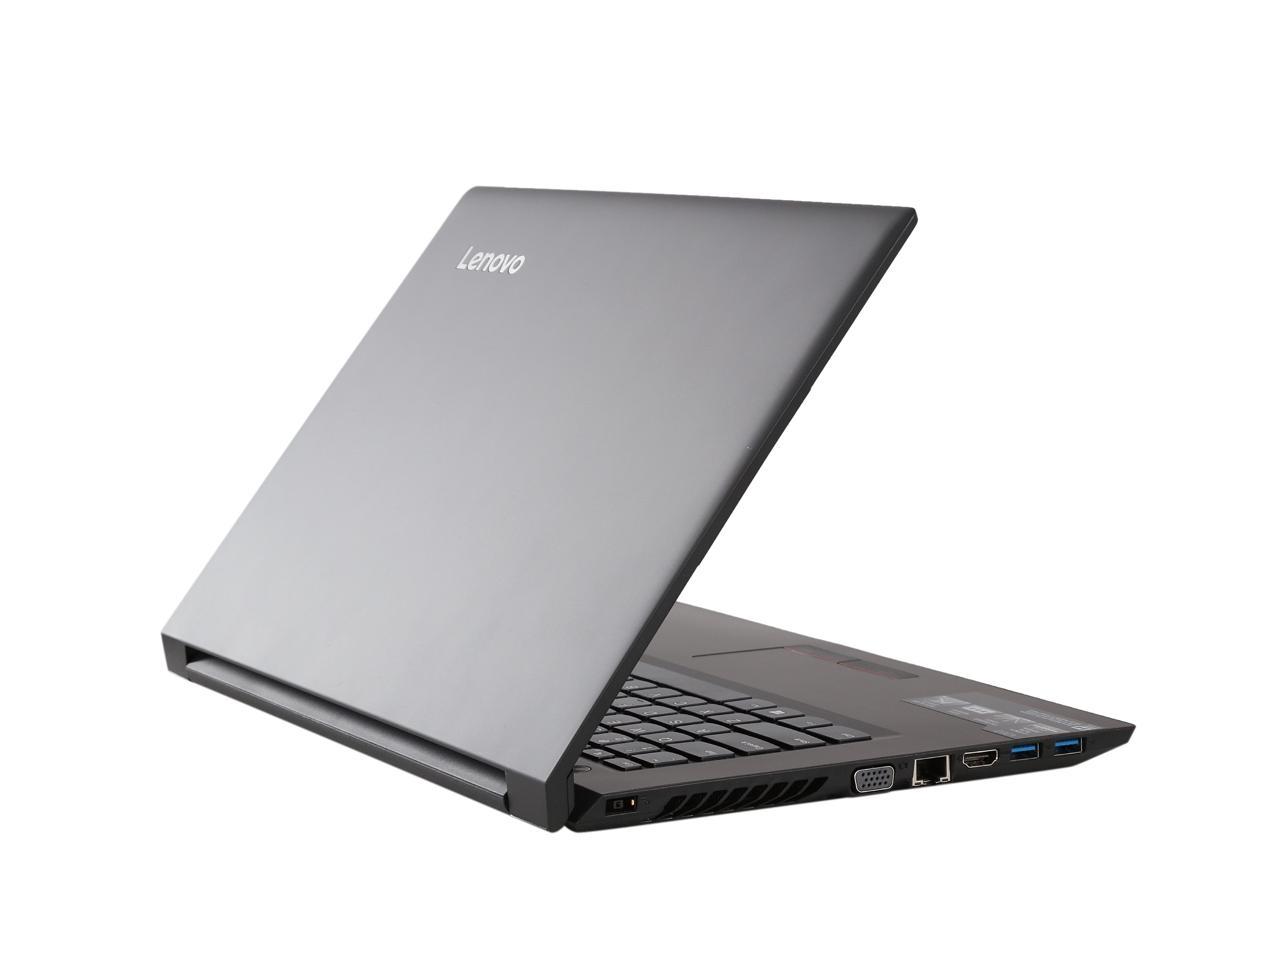 Lenovo IdeaPad V310-14ISK laptop 80SX002KUS Intel Core i3 6th Gen 